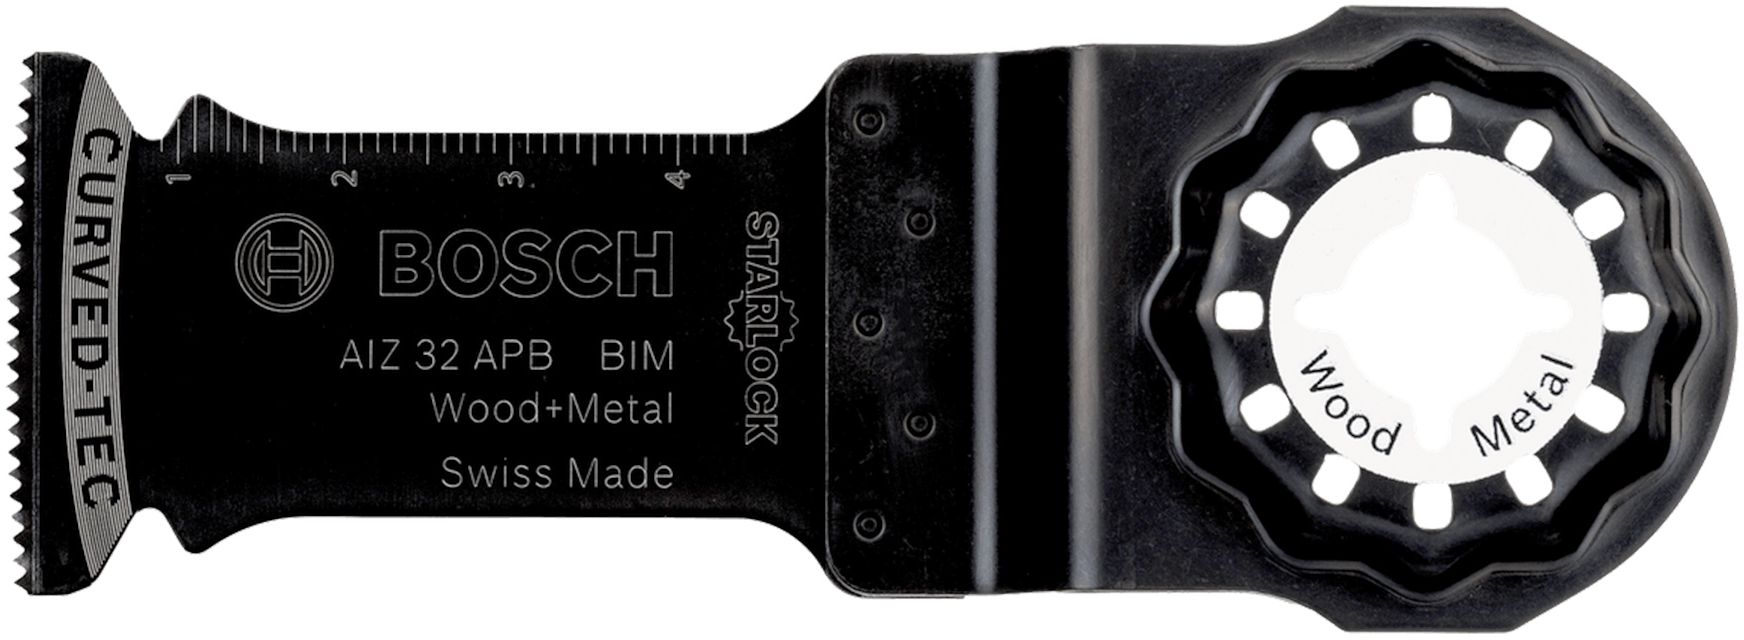 Tauchsägeblatt AIZ 32 APB Holz + Metall 32/40mm, BIM, Starlock, 2 608661 644 - Bosch Maschinenzubehör